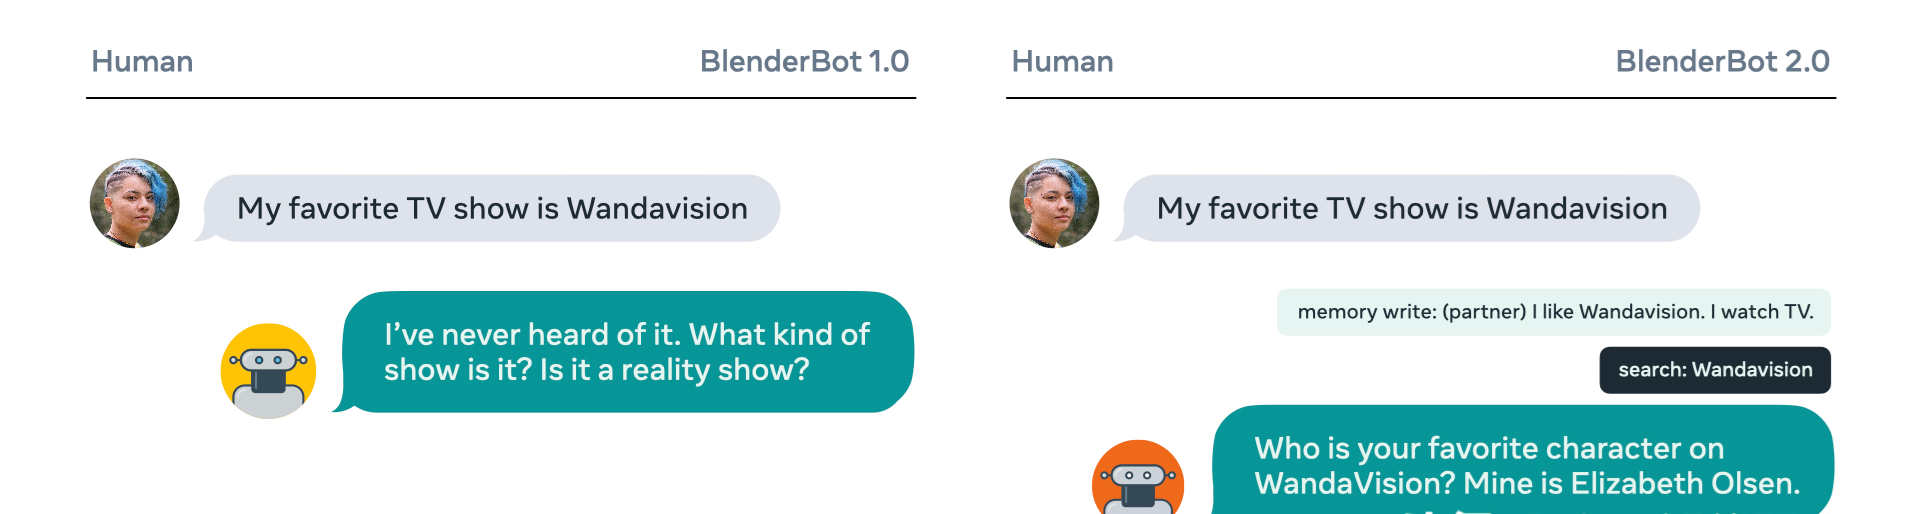 Blender Bot：一个开源聊天机器人，可以建立长期记忆并搜索互联网